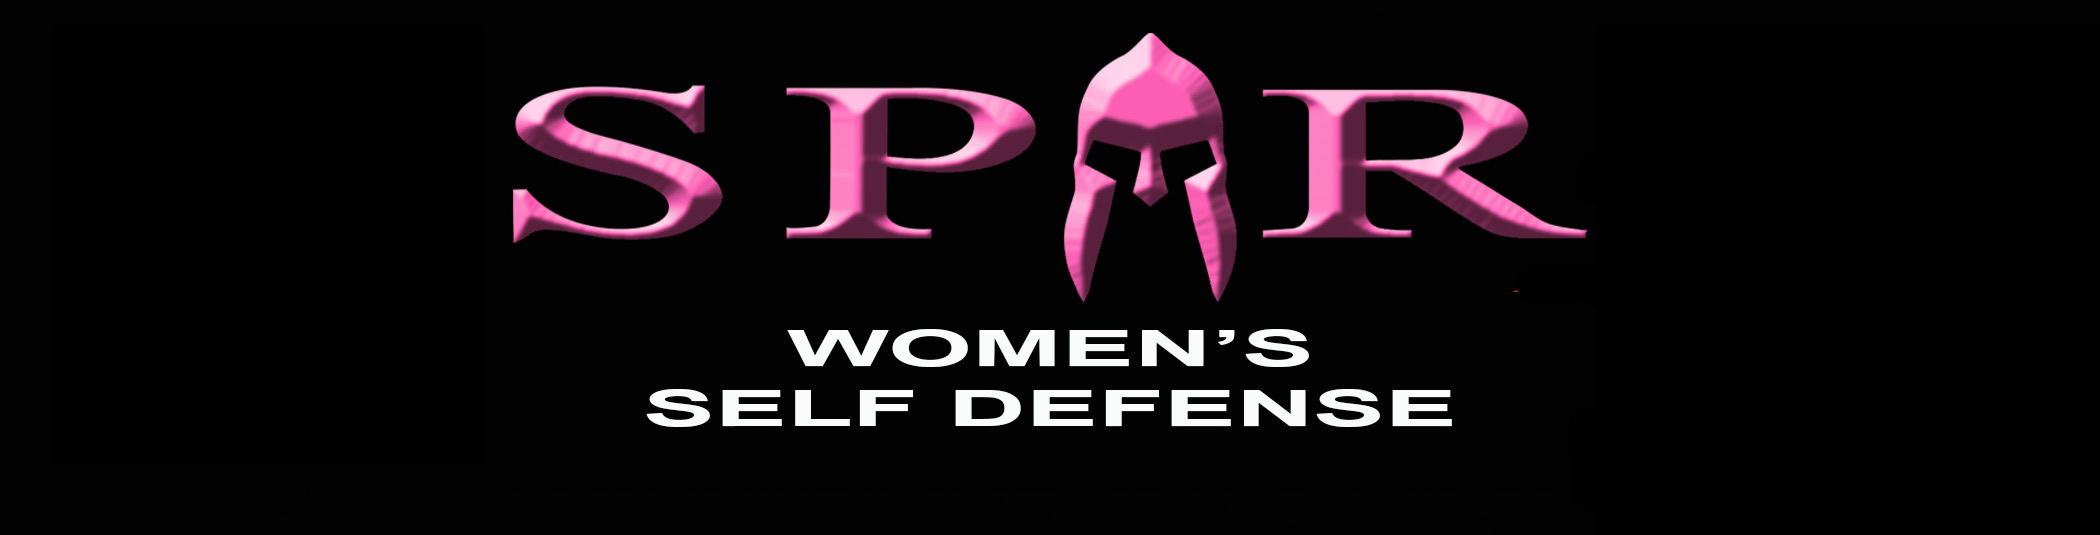 Women's Self Defense Buffalo New York